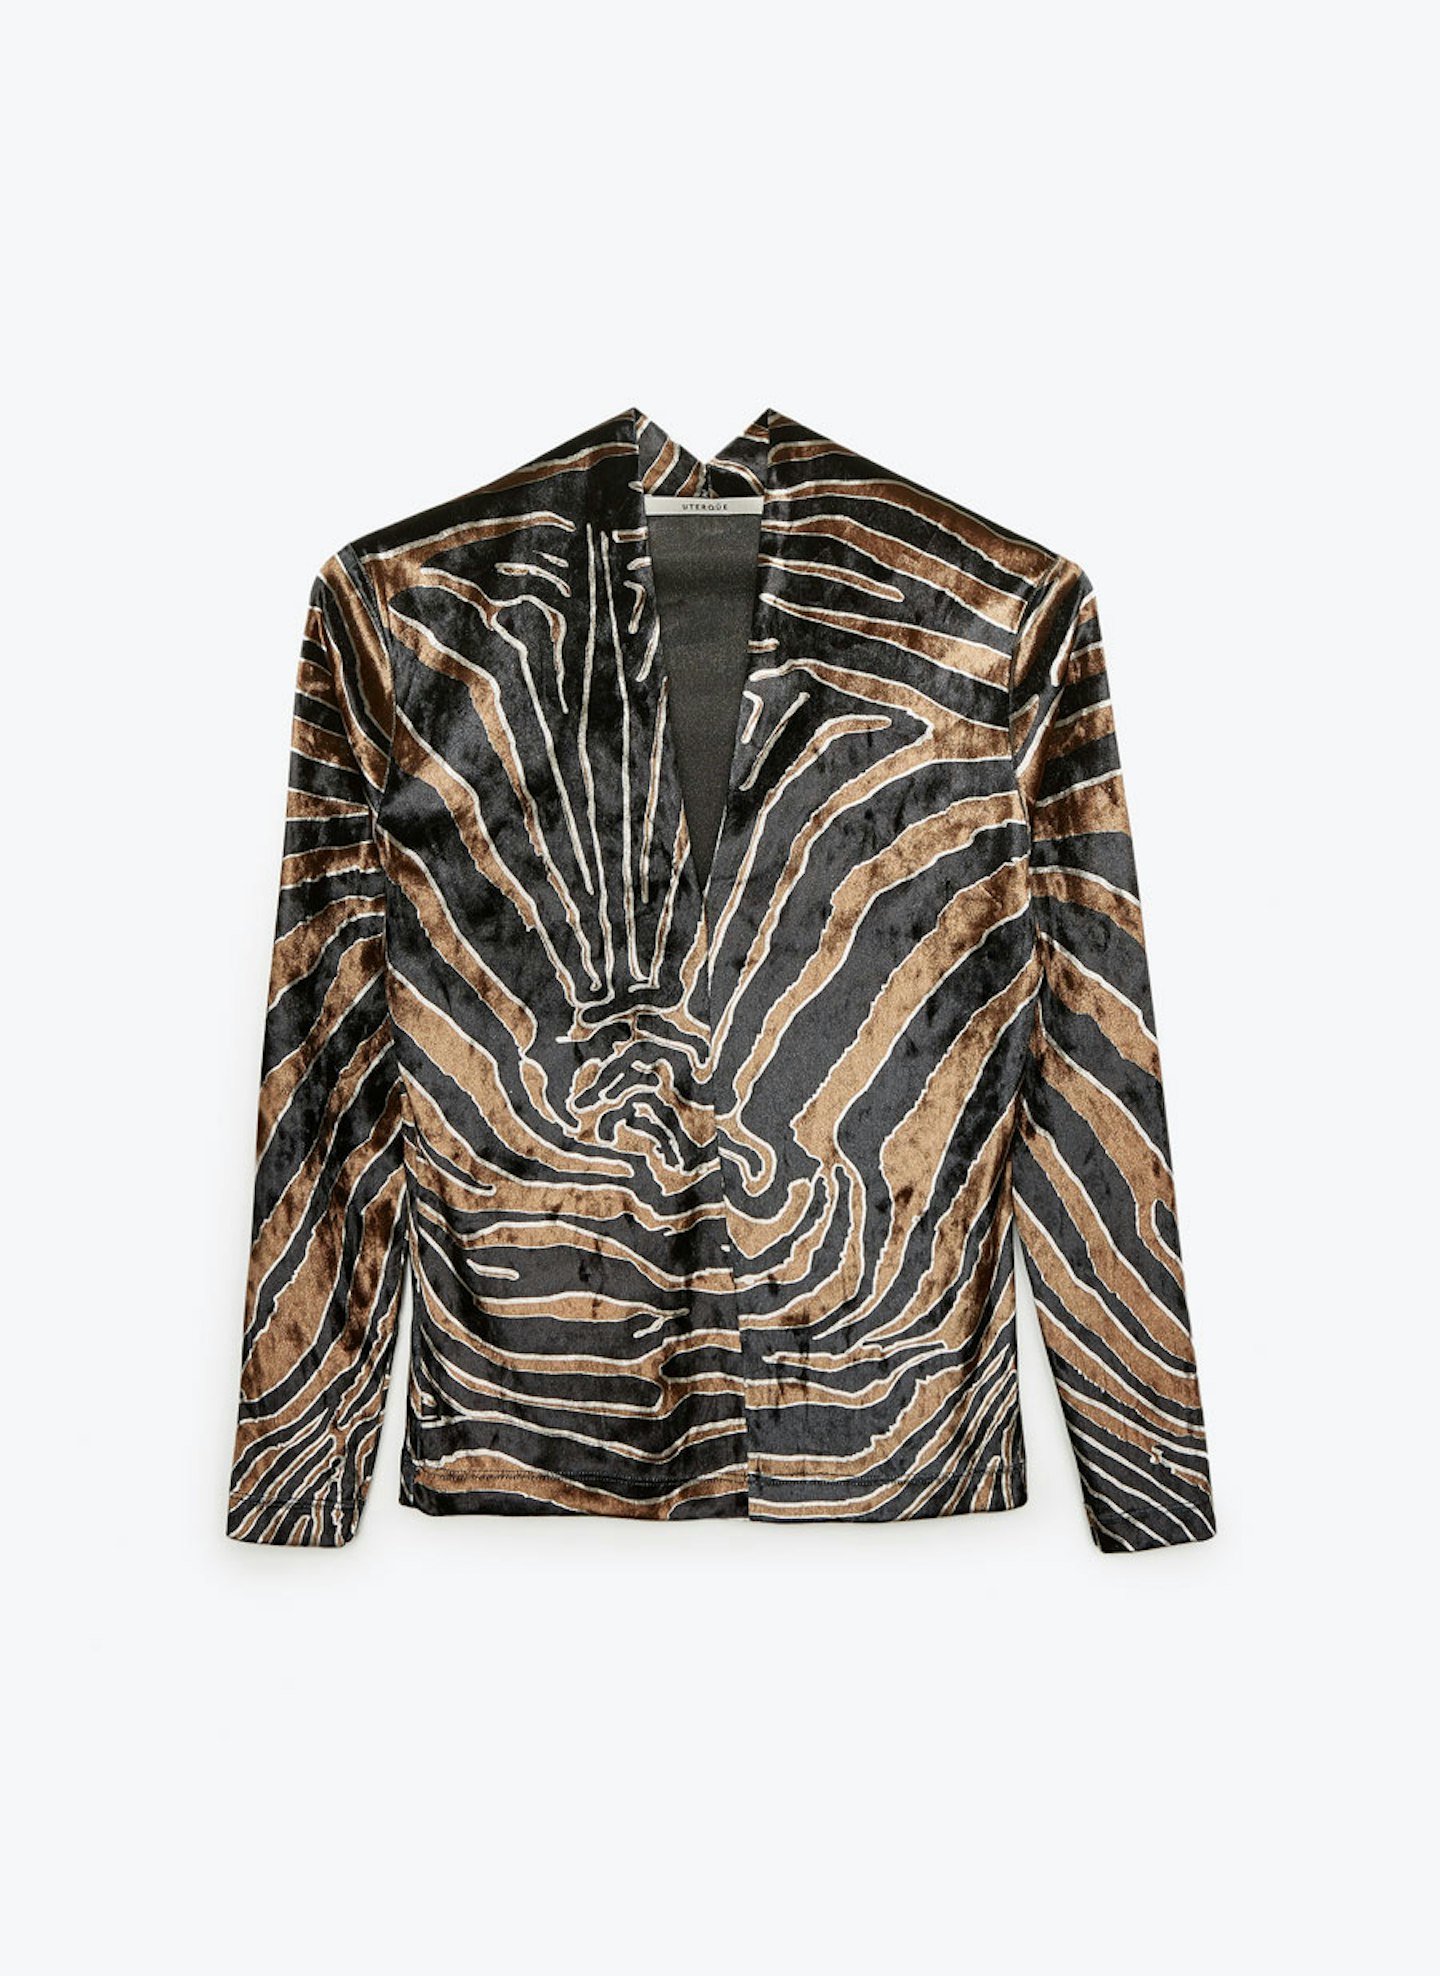 Uterque, Zebra Velvet Top, £69